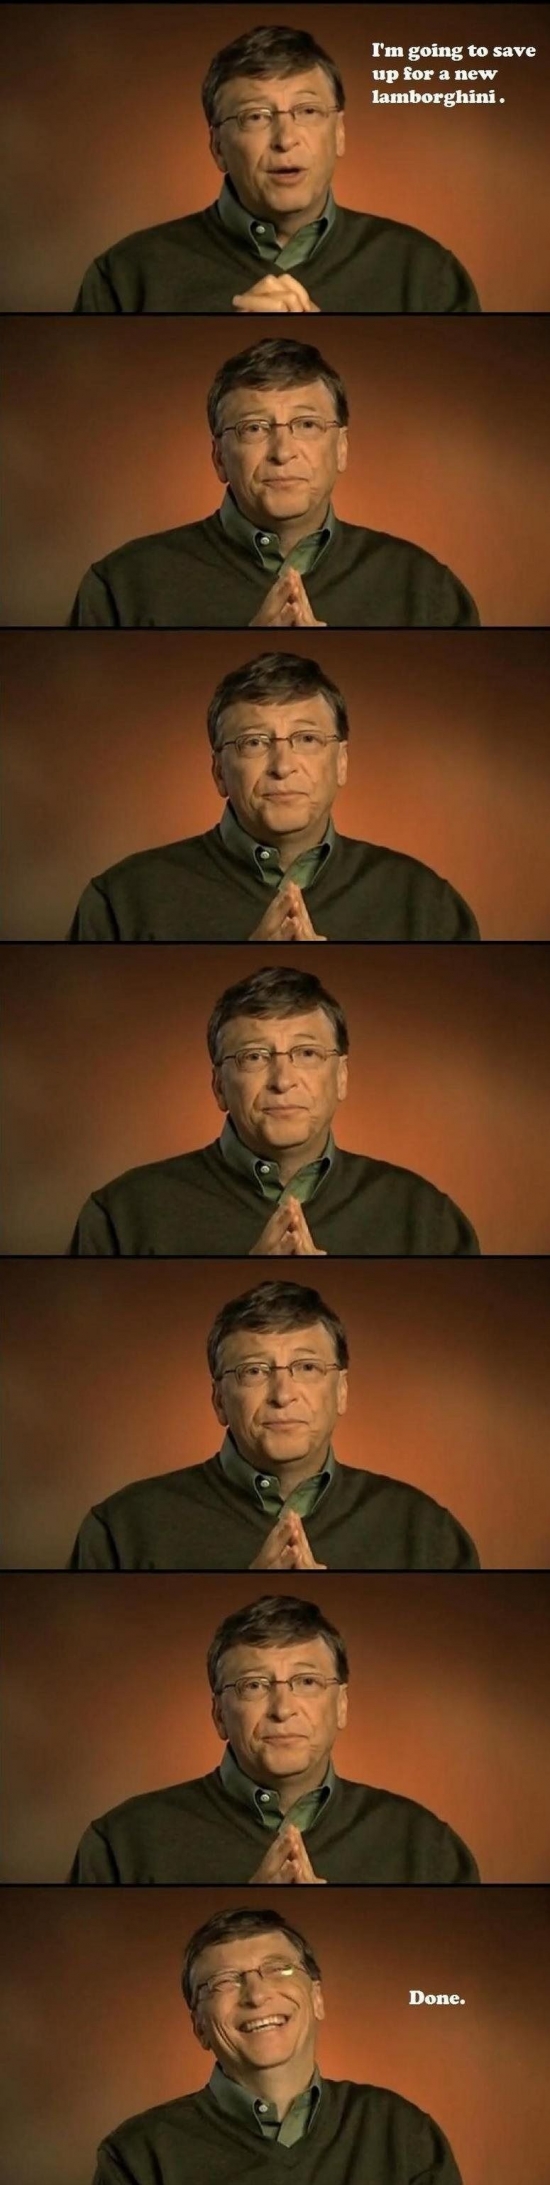 Bill Gates Lamborghini